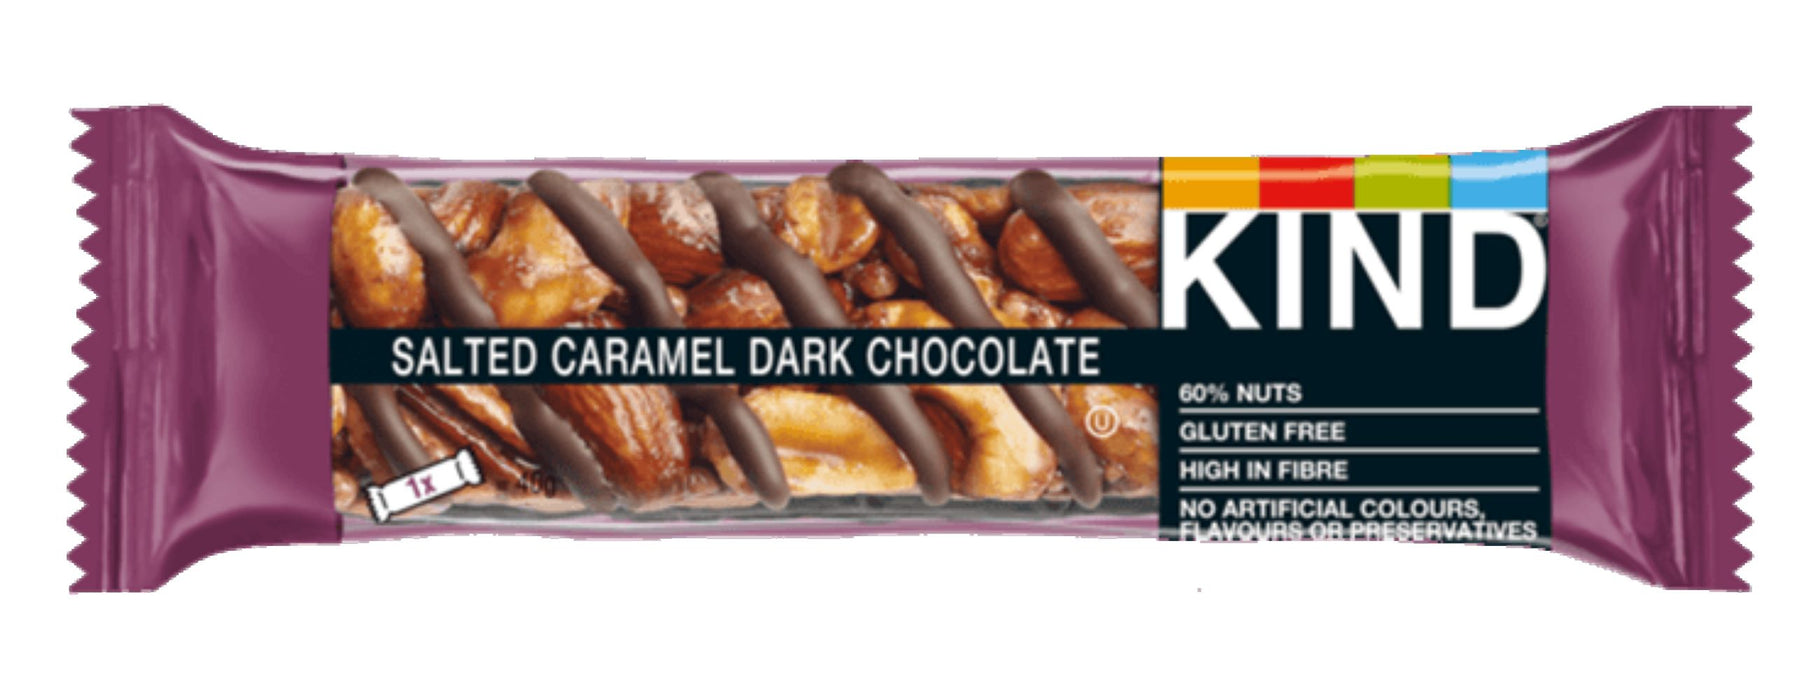 Kind Salted Caramel Dark Chocolate 40g